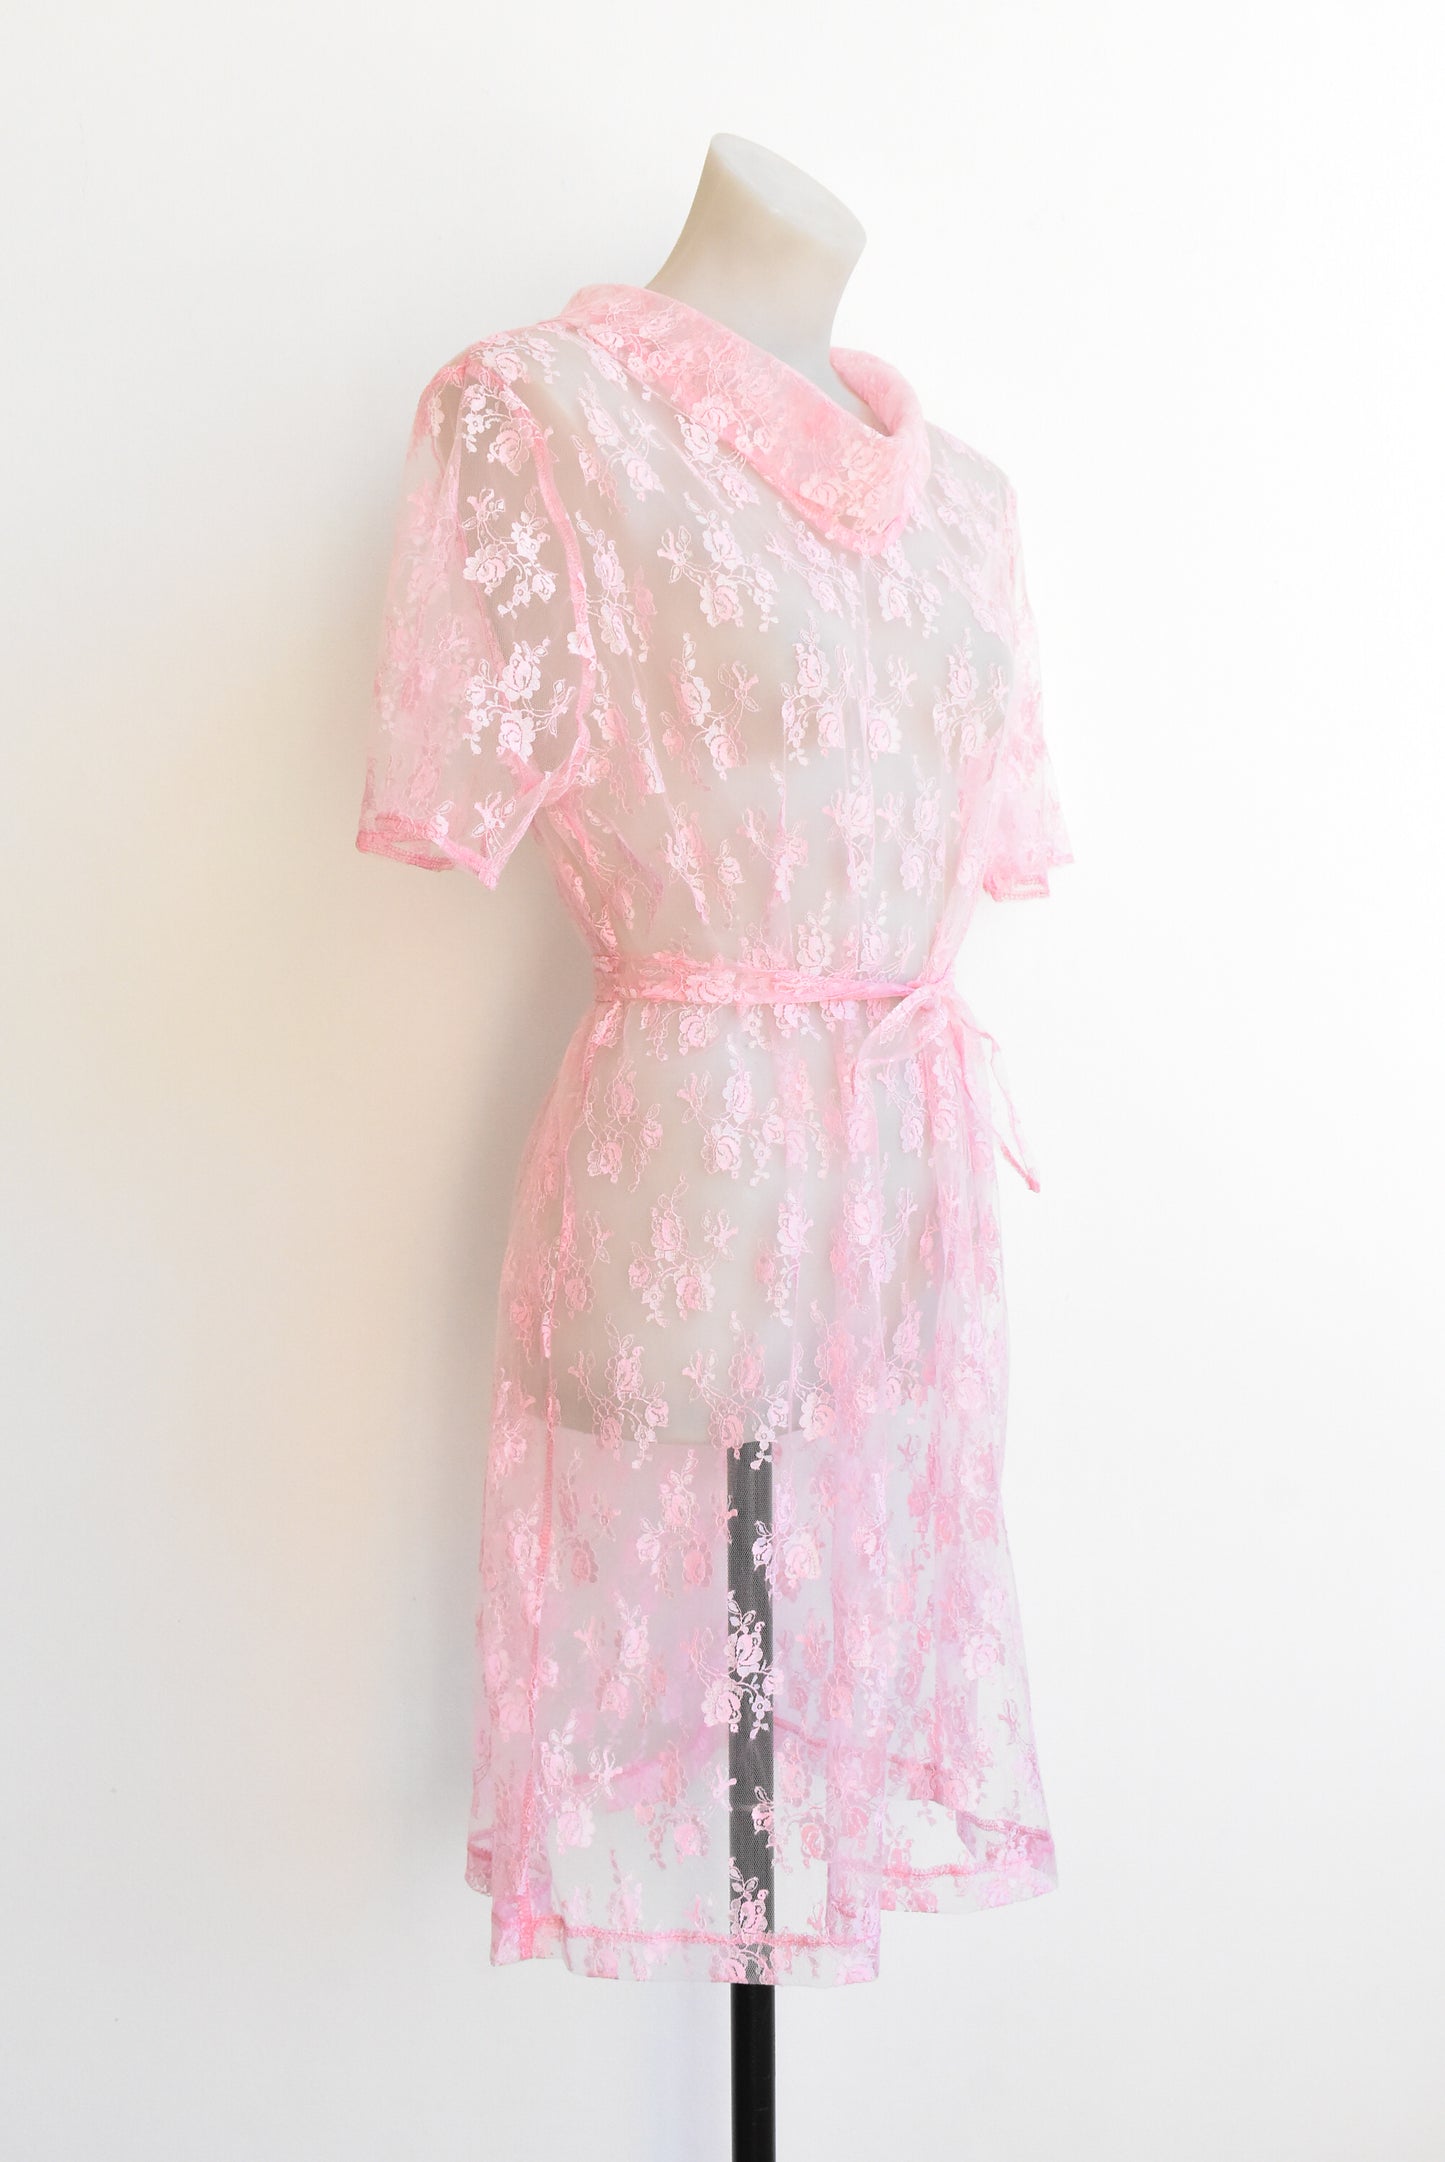 Pink floral lace dress, size S